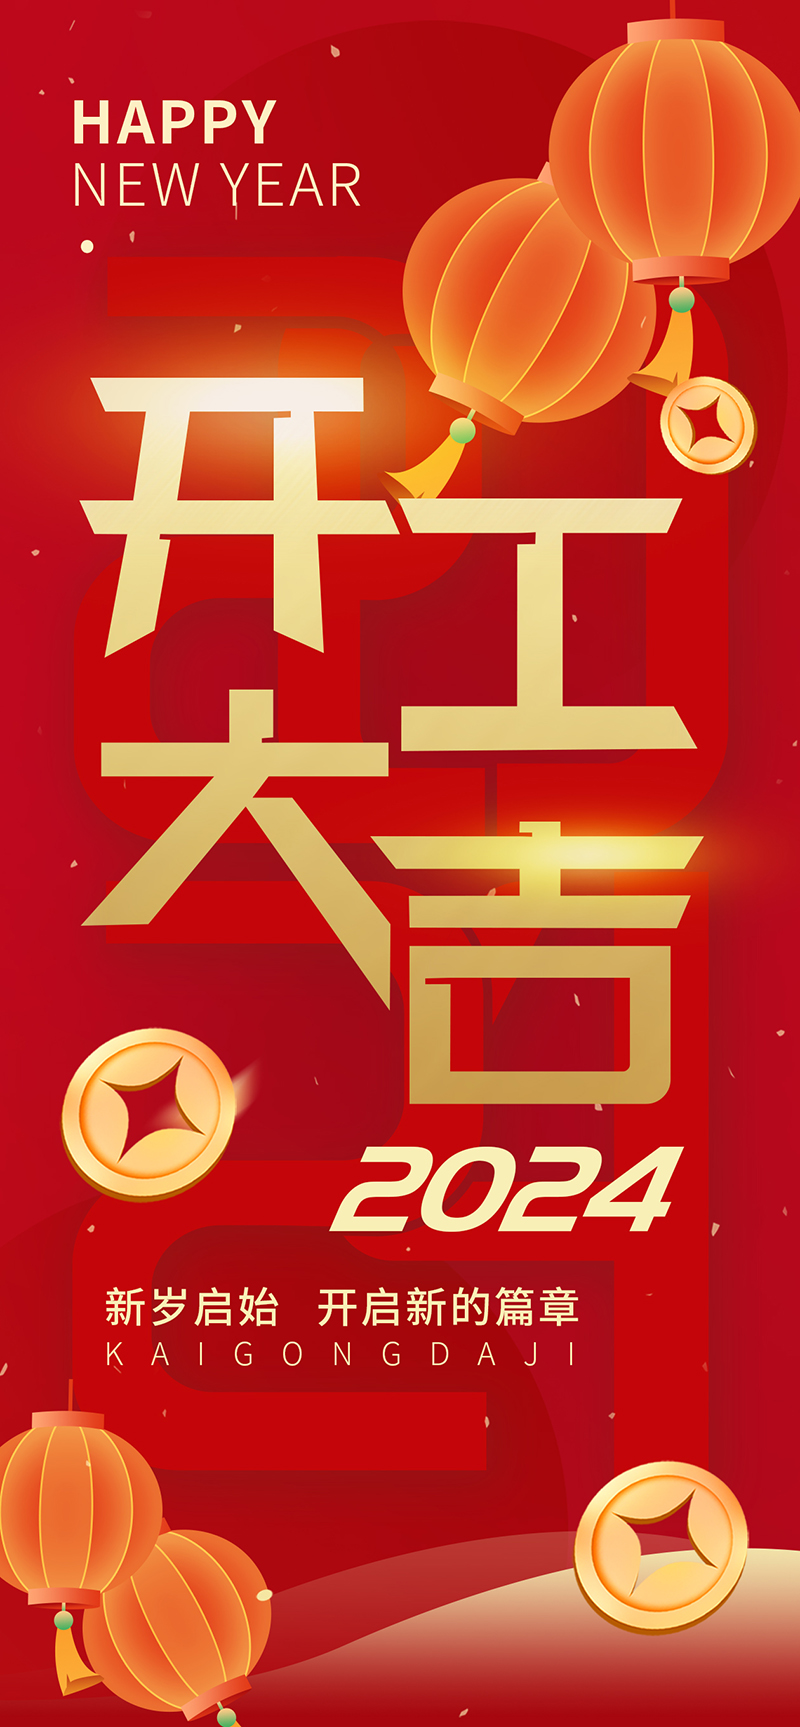 2024 Start work, dragon everywhere, start a new journey!